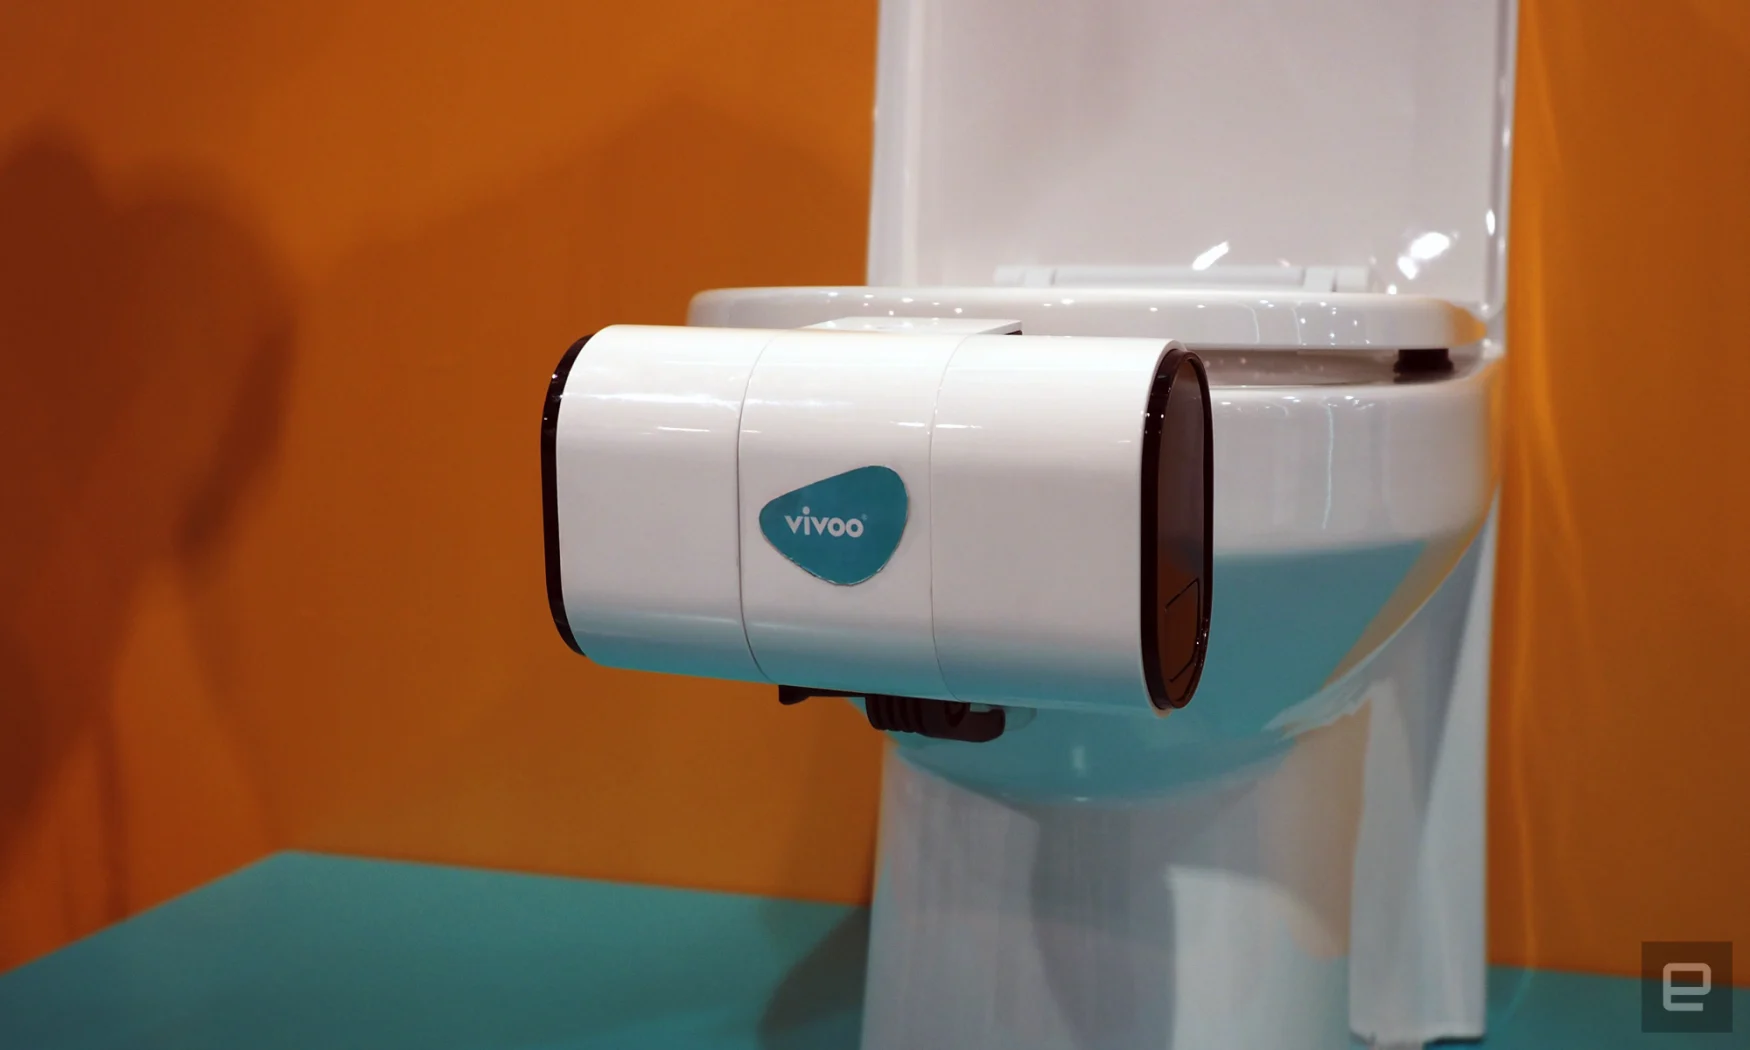 Image of Vivoo's toilet-mounted urinalysis device.